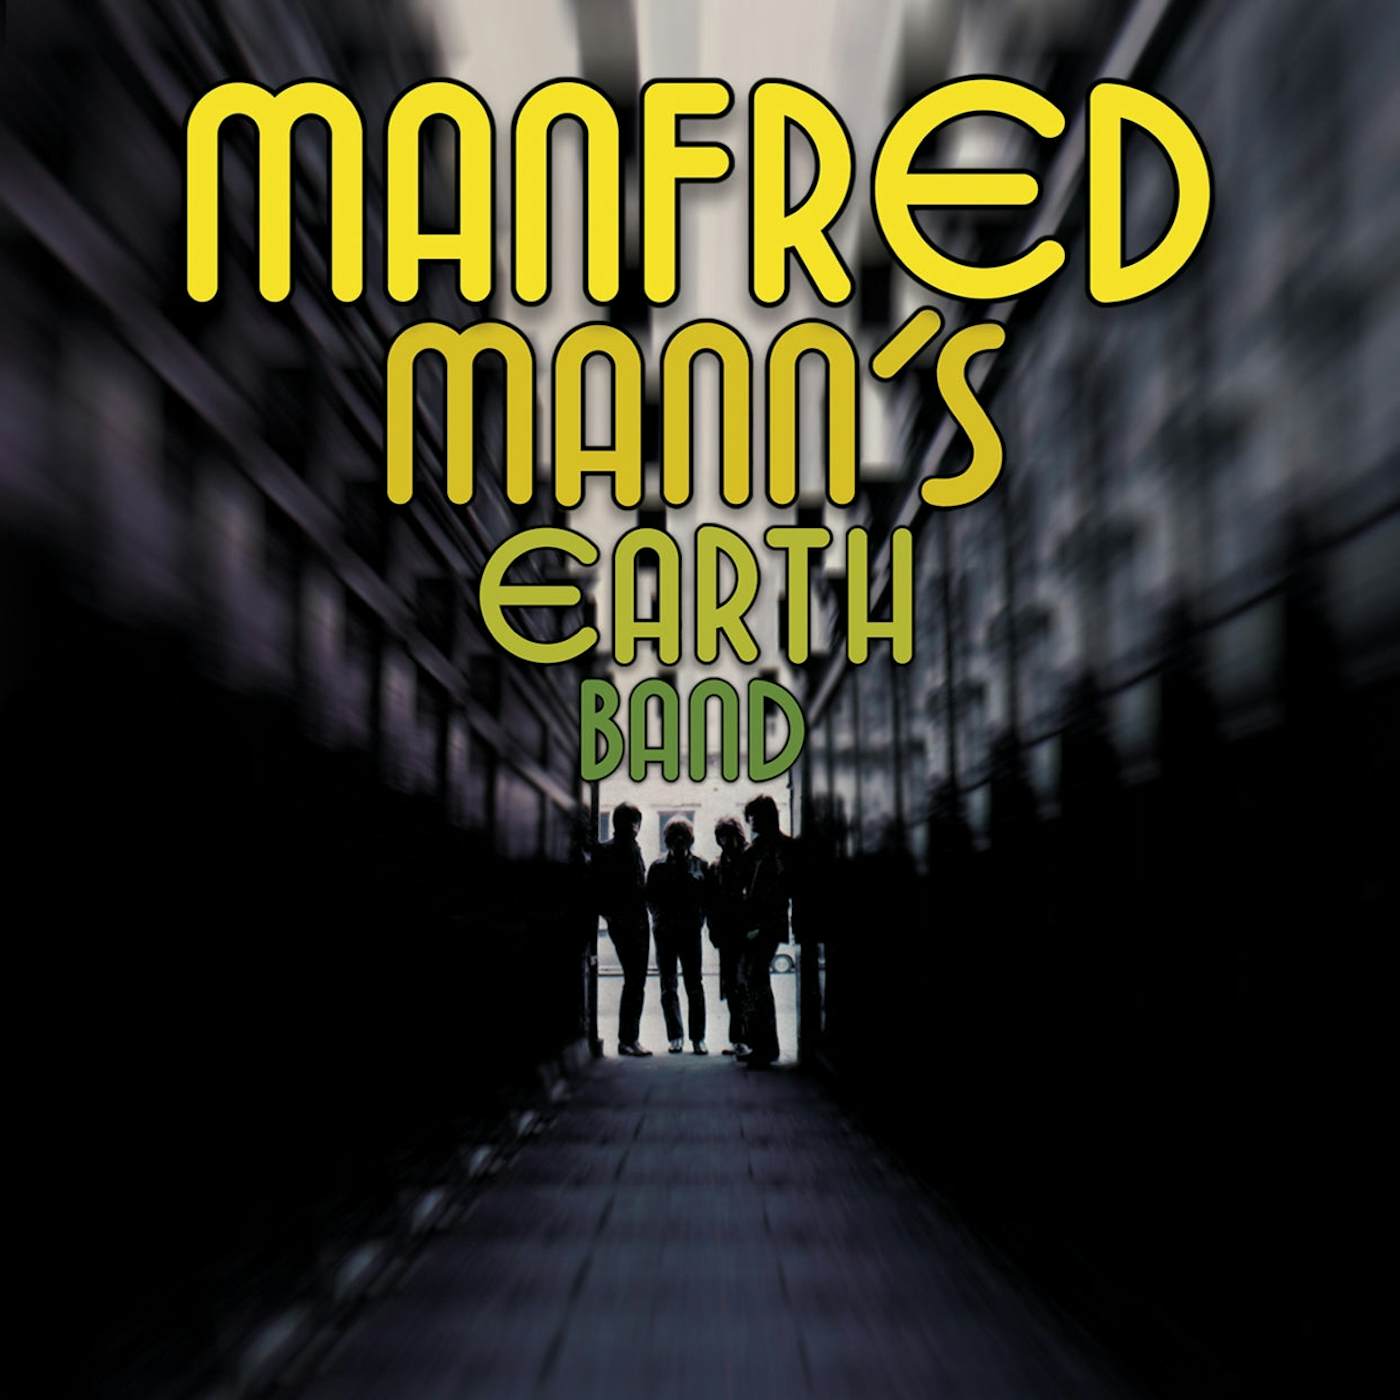 Manfred Mann'S Earth Band LP - Manfred Mann'S Earth Band (Vinyl)